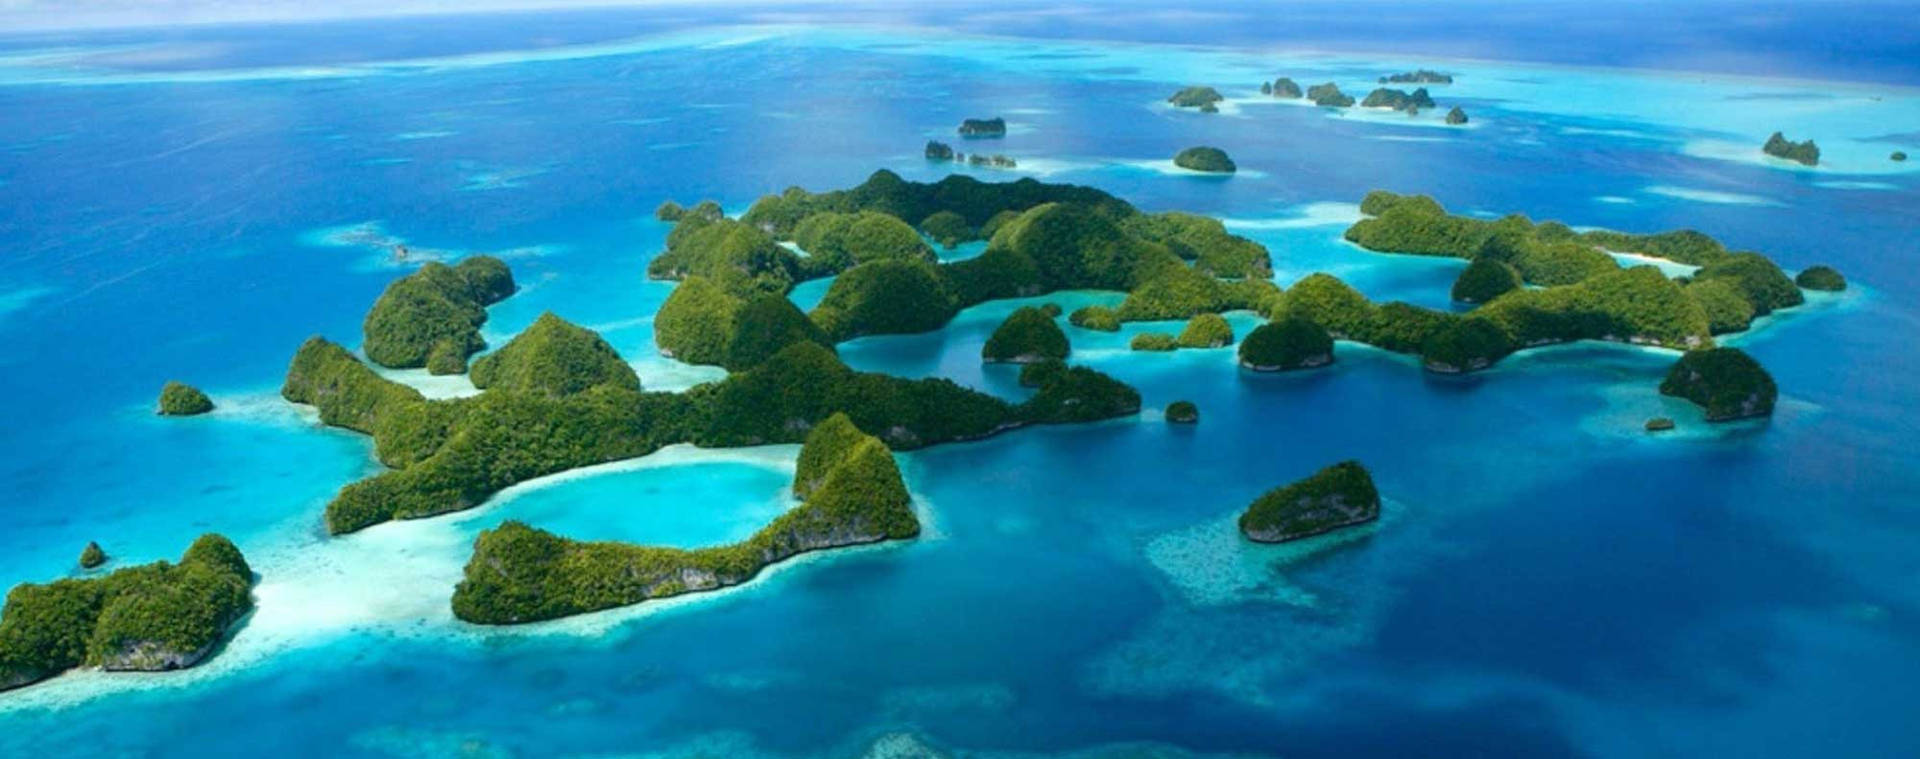 Micronesia Palau Beautiful Rock Islands Wallpaper